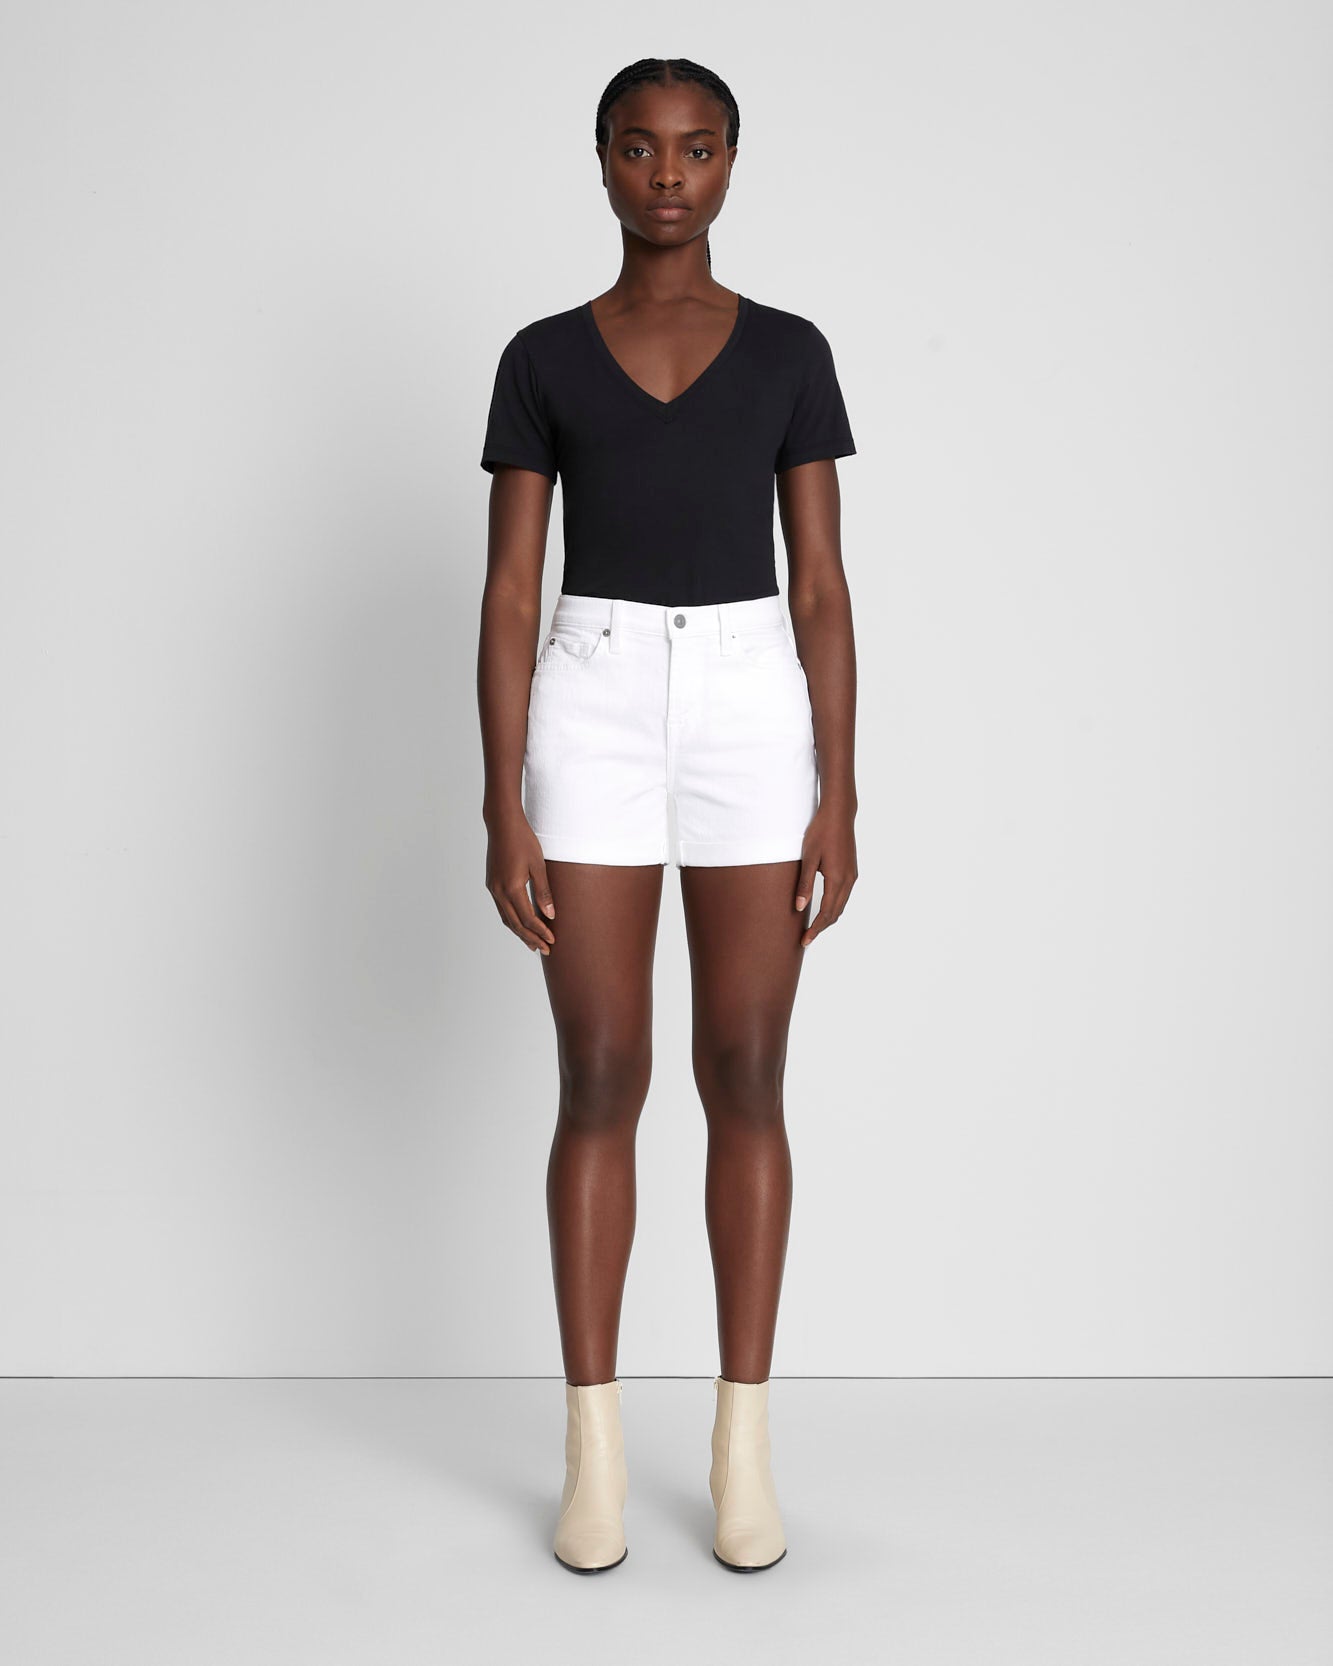 Buy KLART Short Skirt for Women|Pleated Mini Skirt|Tennis Skater with  Attached Lycra Shorts at Amazon.in